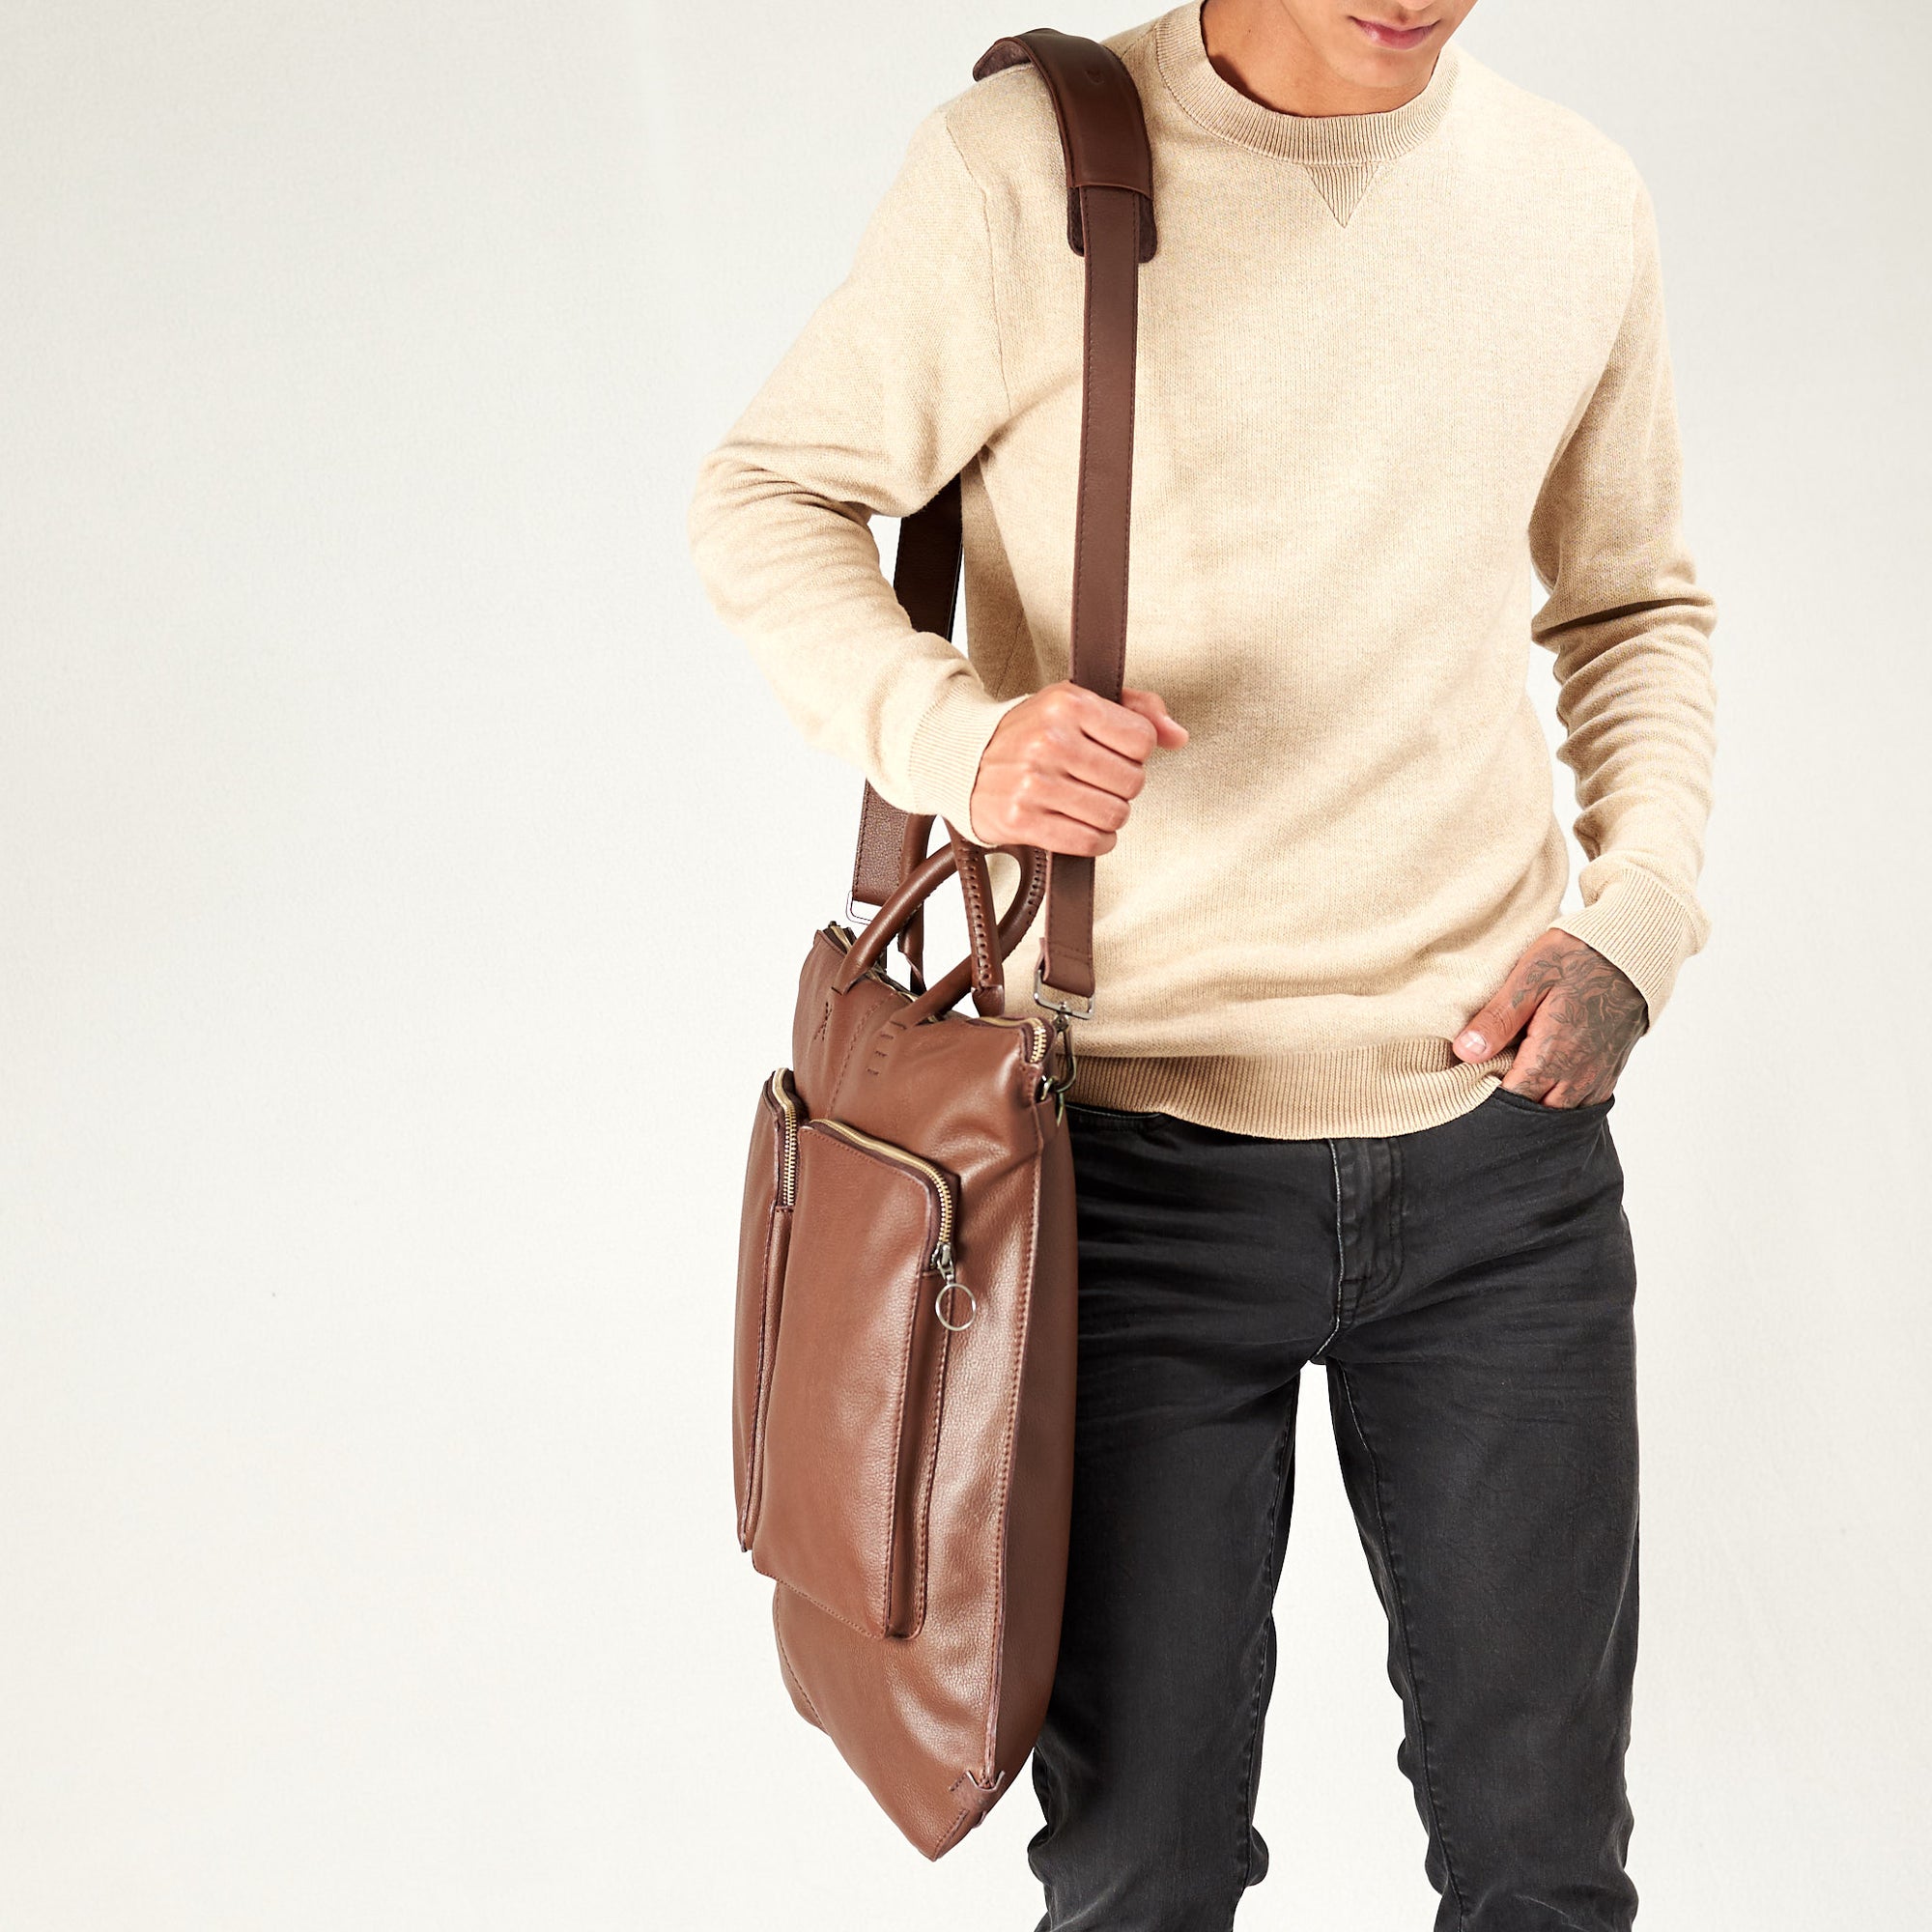 Style side tote. Brown tote zipper bag by Capra Leather. Handmade men work bag.